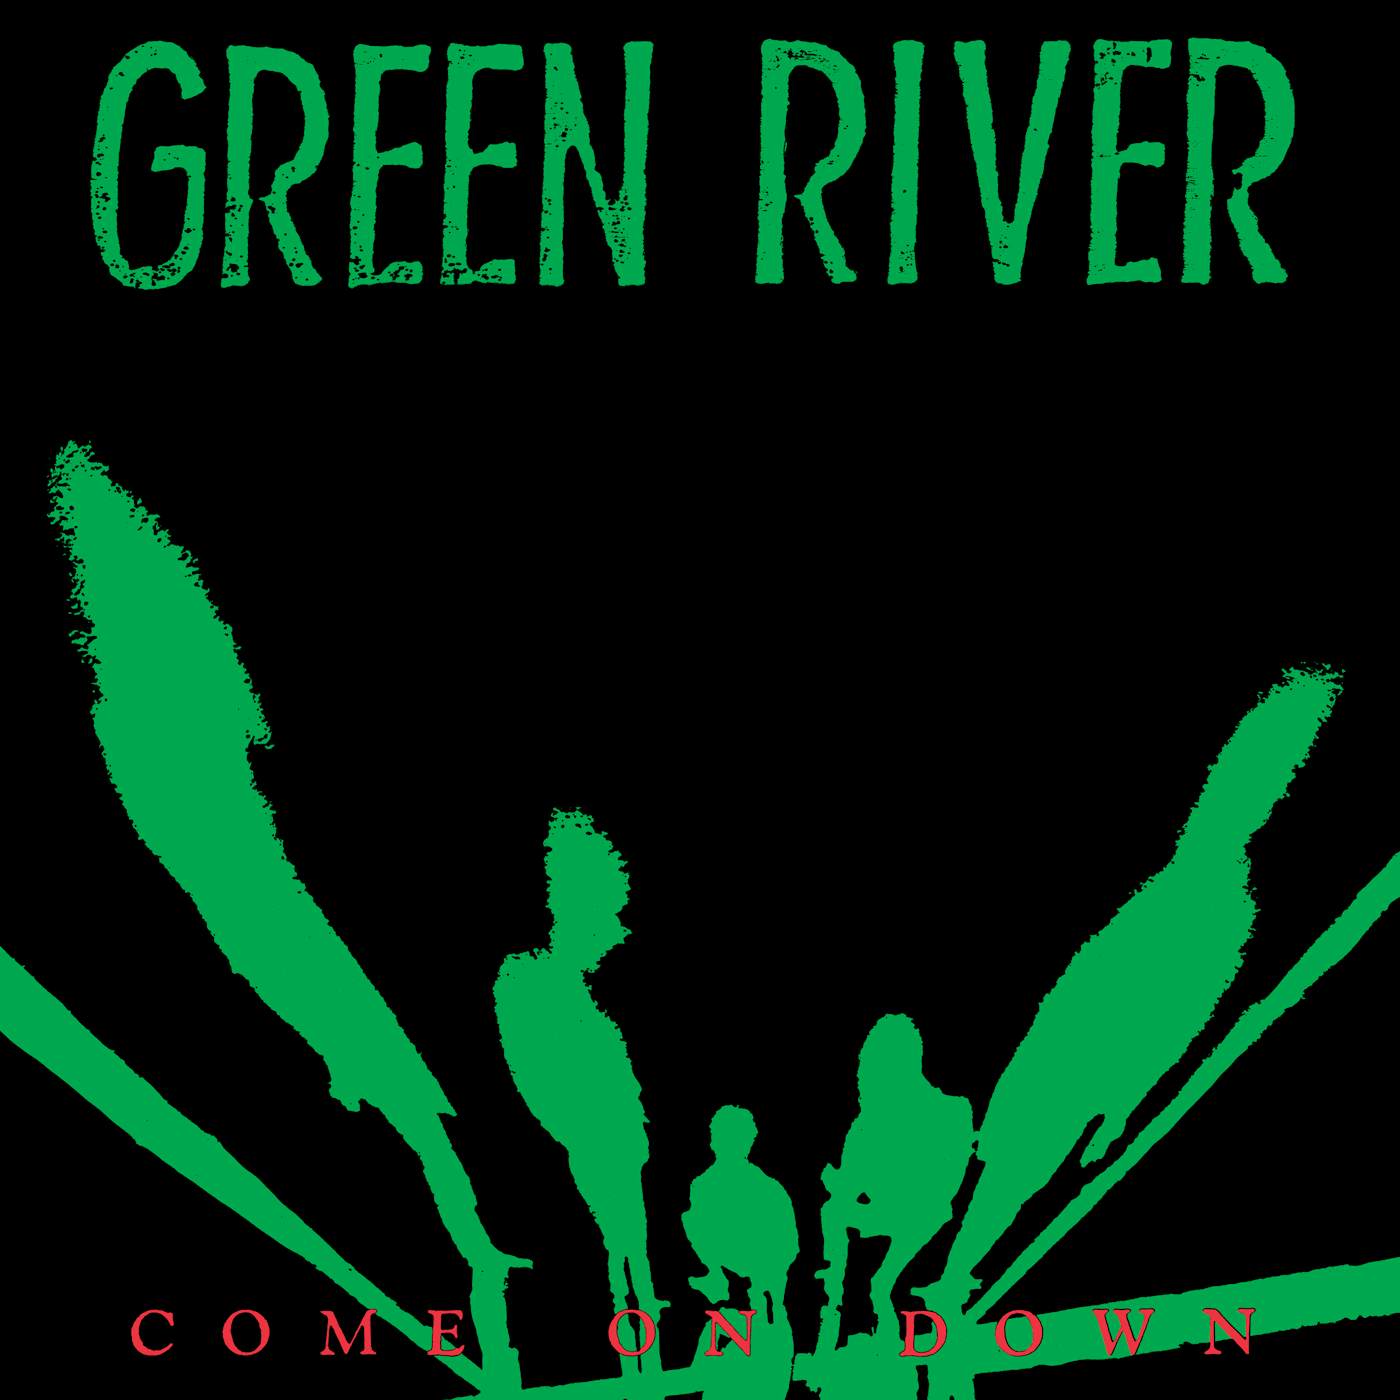 Green River COME ON DOWN - Colored Vinyl Record